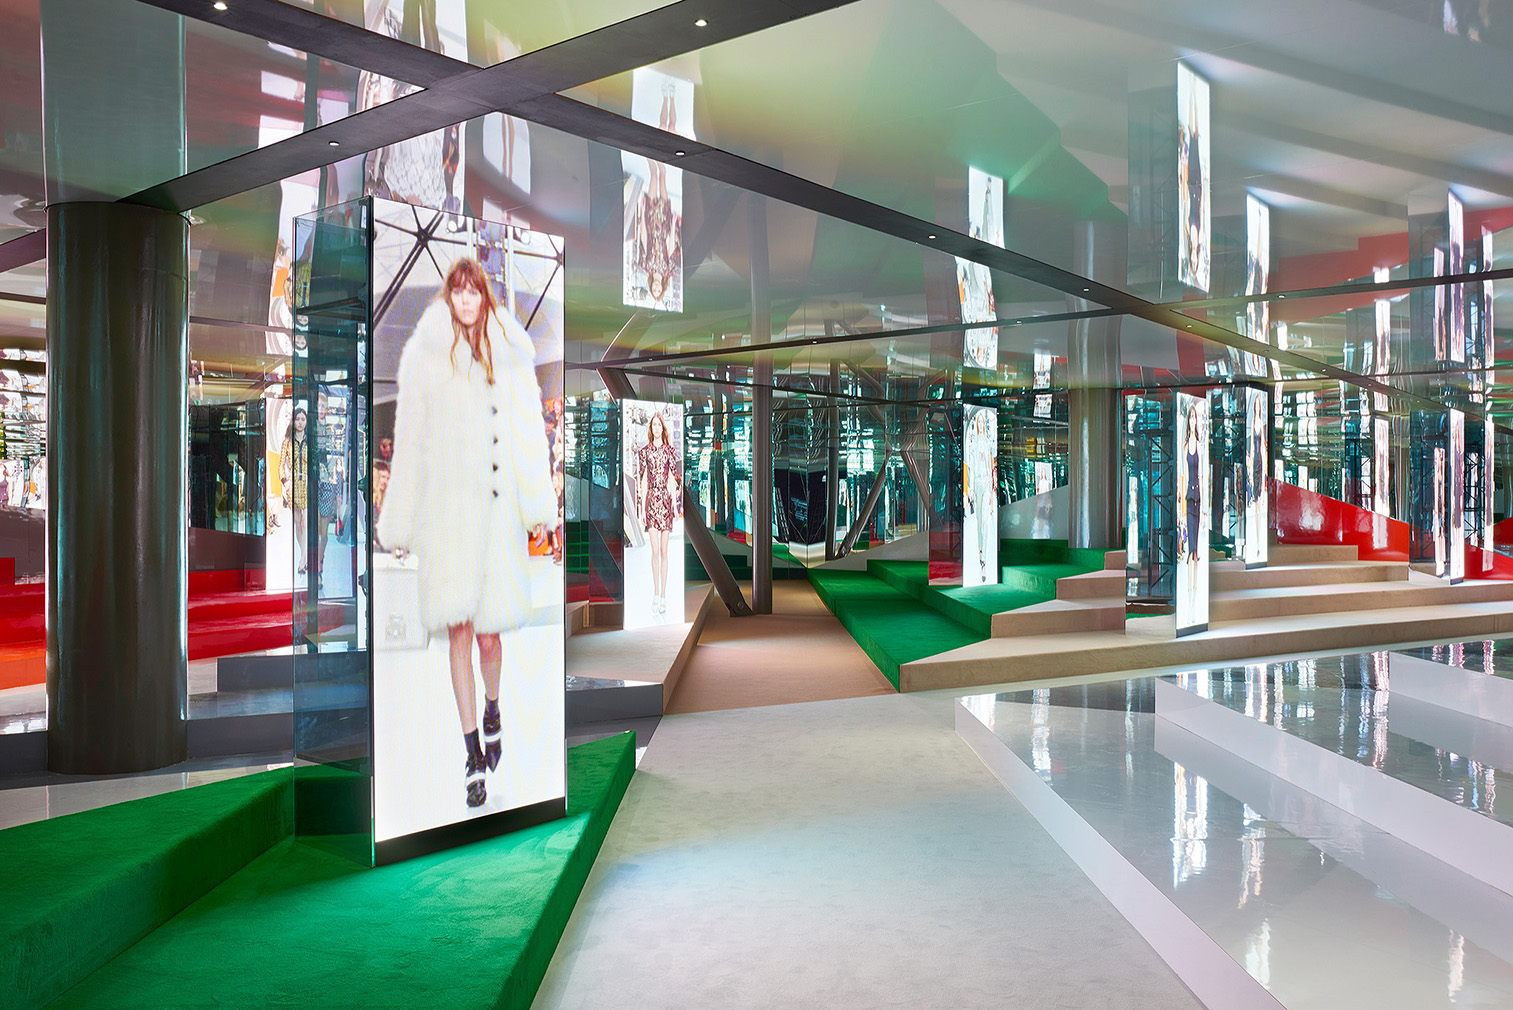 Louis Vuitton's new Garage Traversi store is an immersive Kusama